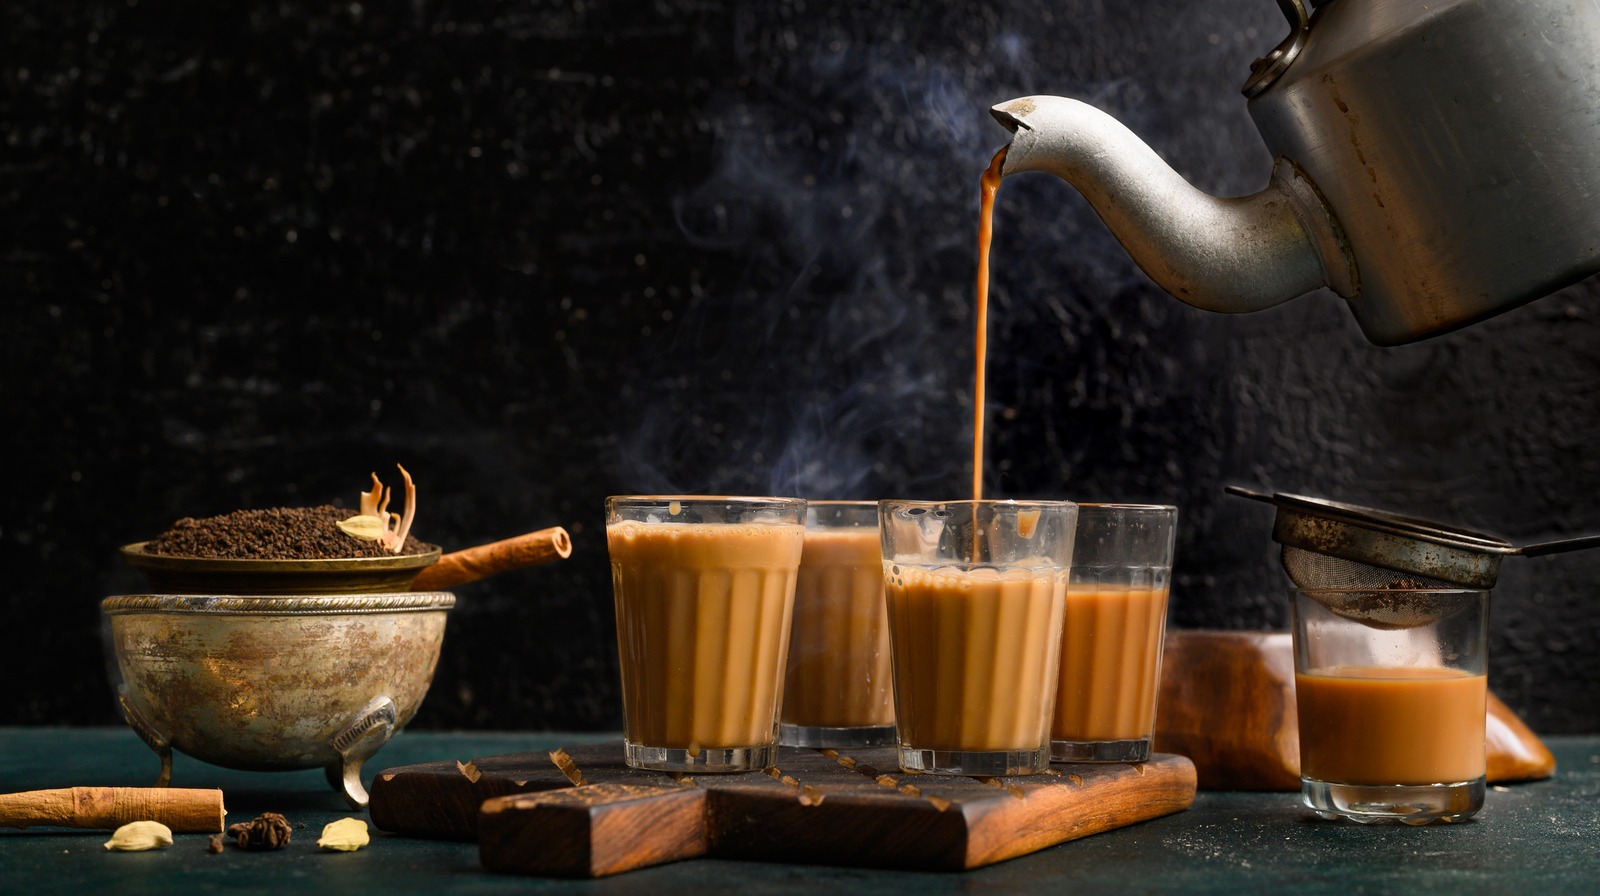 Chai tea: Discover Indian tea